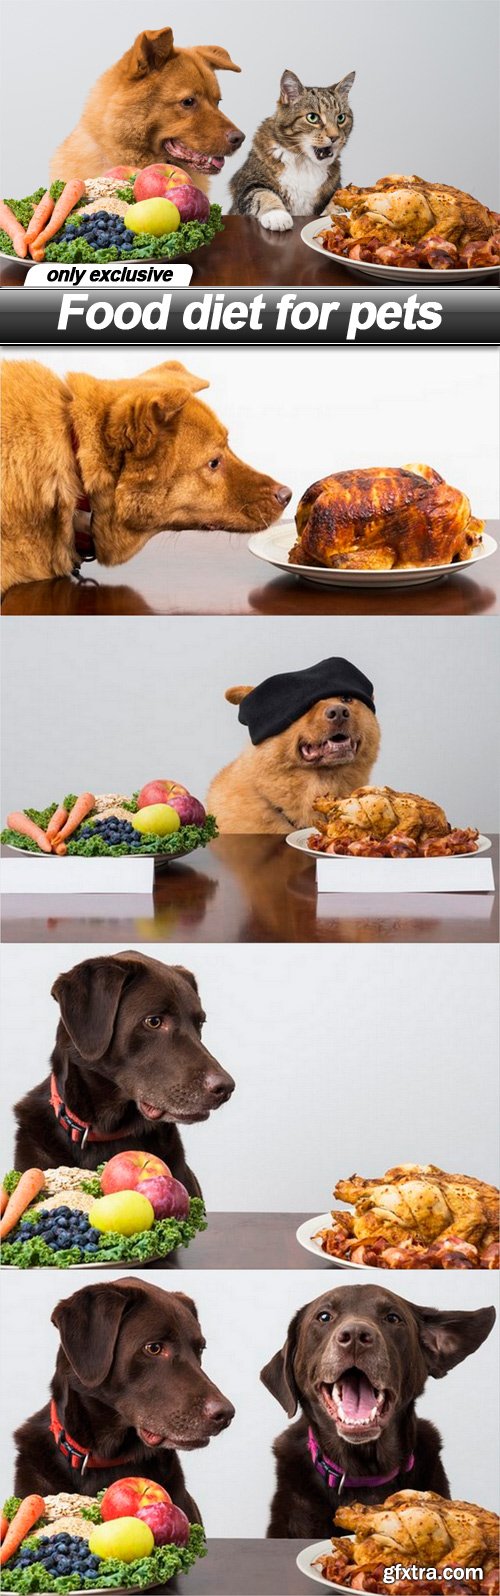 Food diet for pets - 5 UHQ JPEG